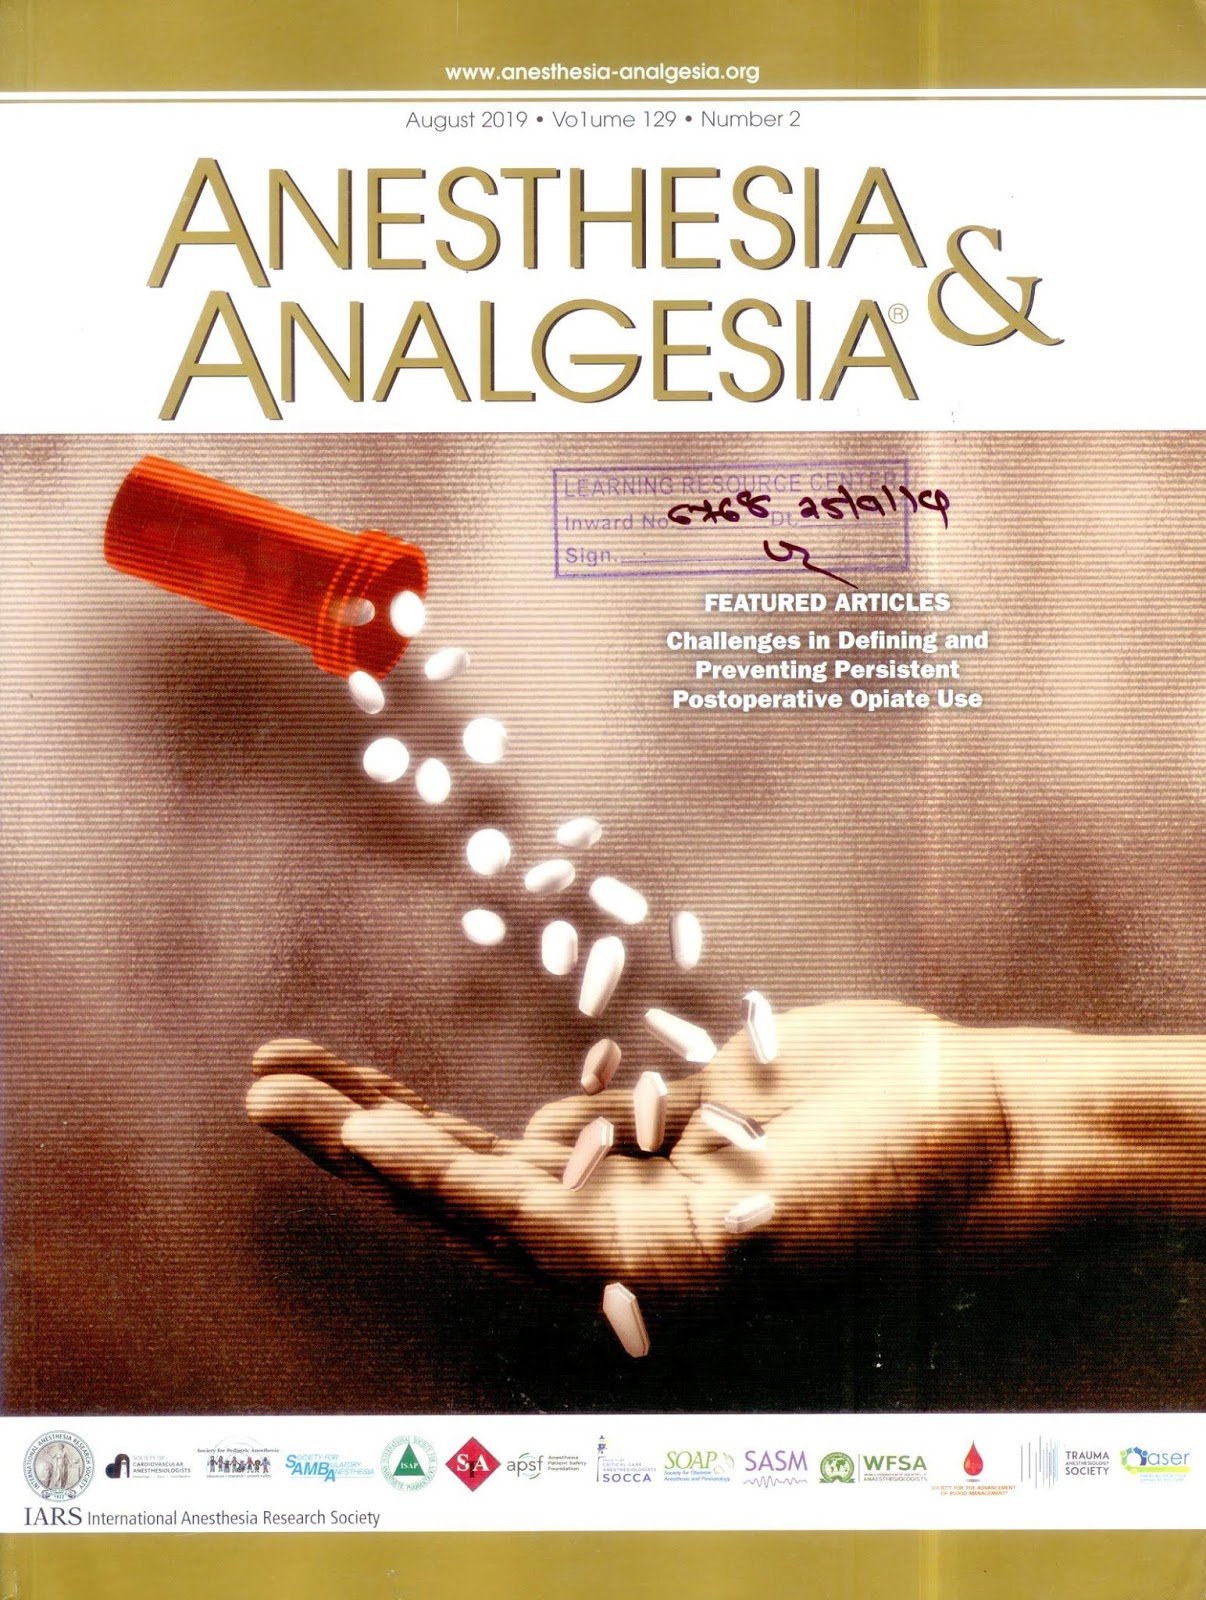 https://journals.lww.com/anesthesia-analgesia/toc/2019/08000